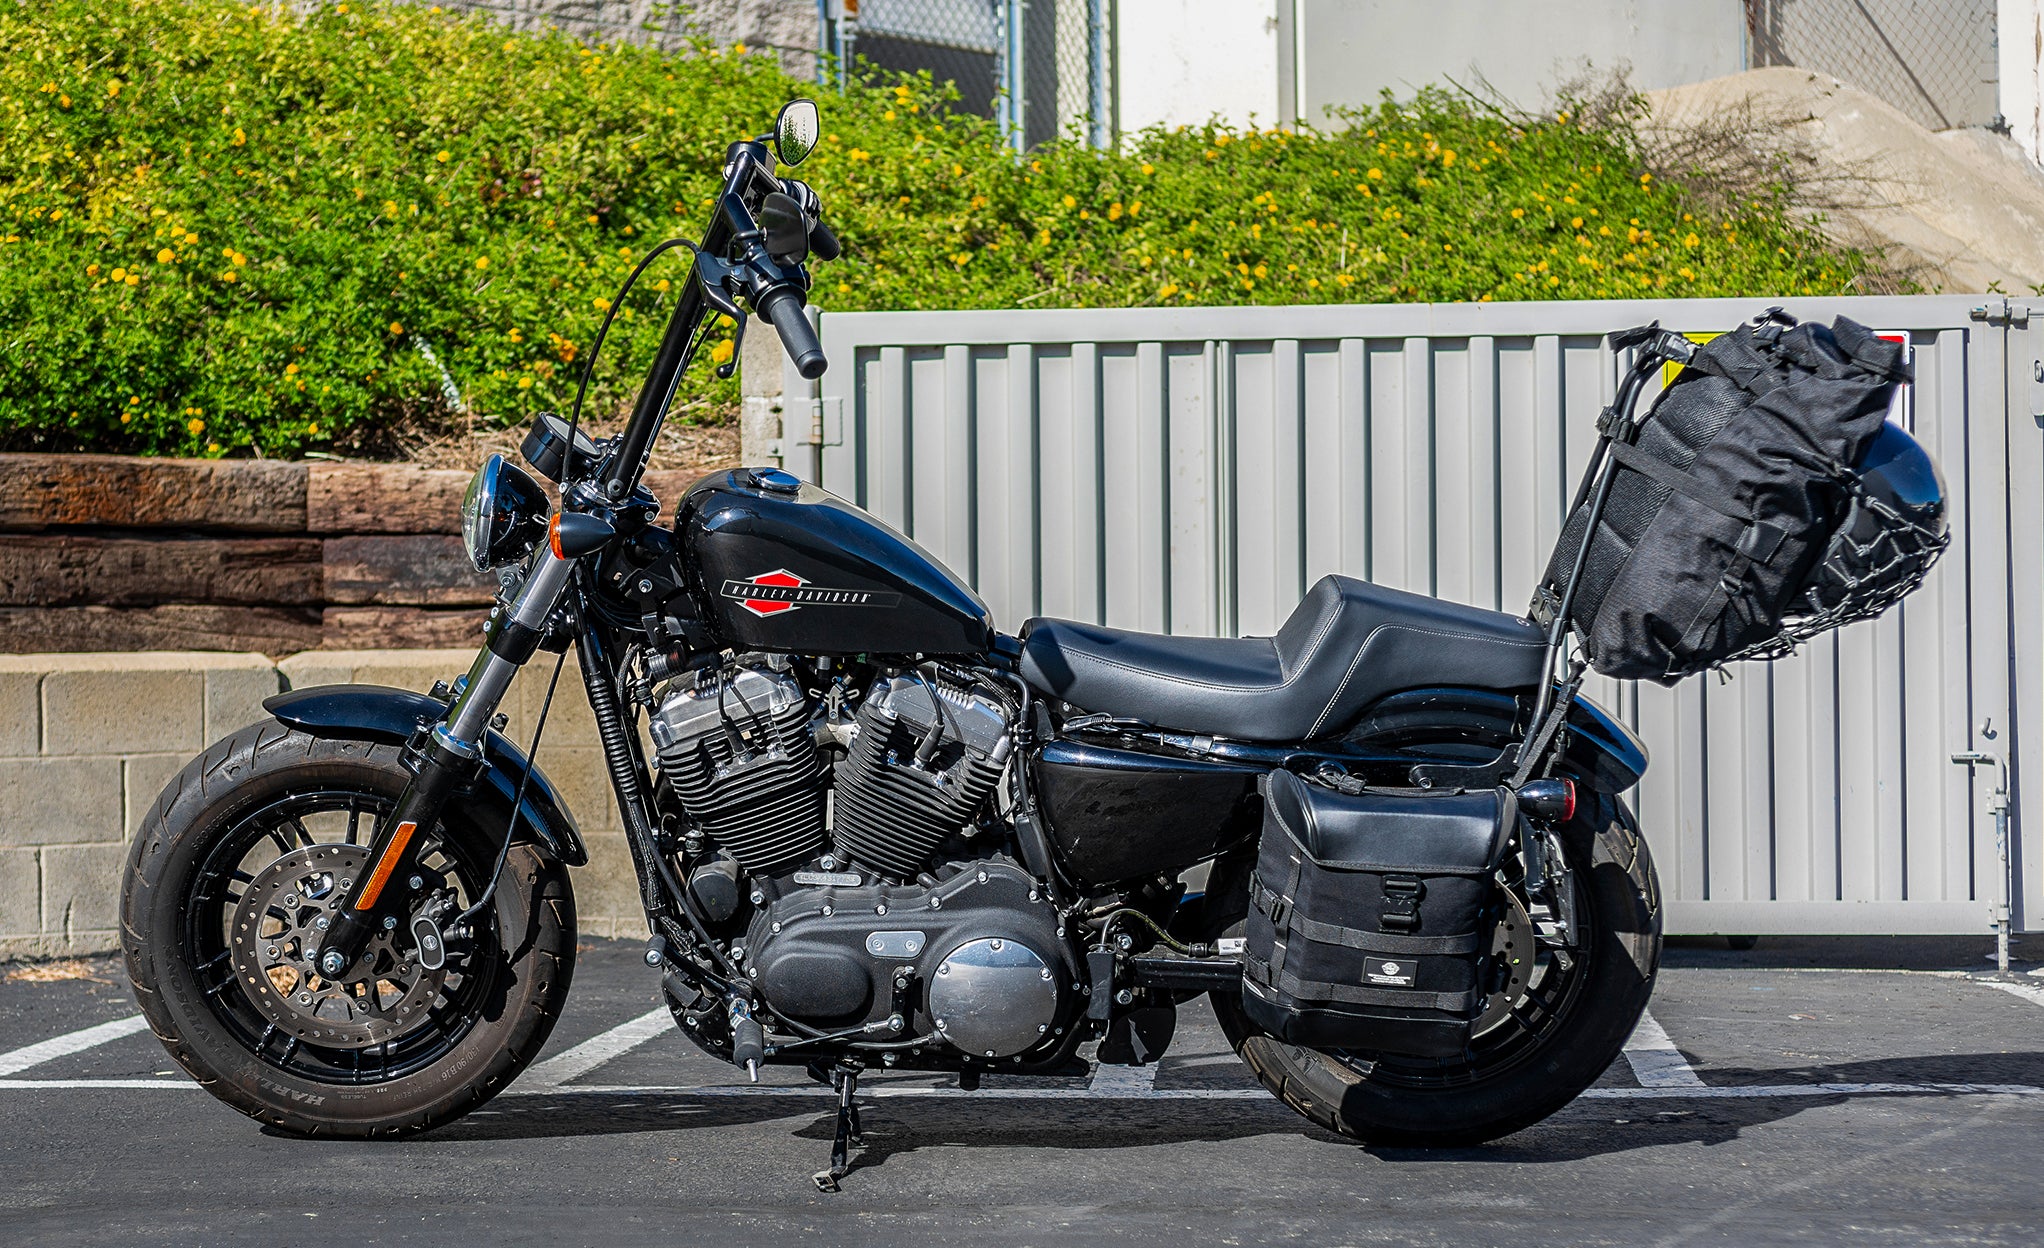 32L - Vanguard Large Dry Harley Davidson Motorcycle Tail Bag @expand